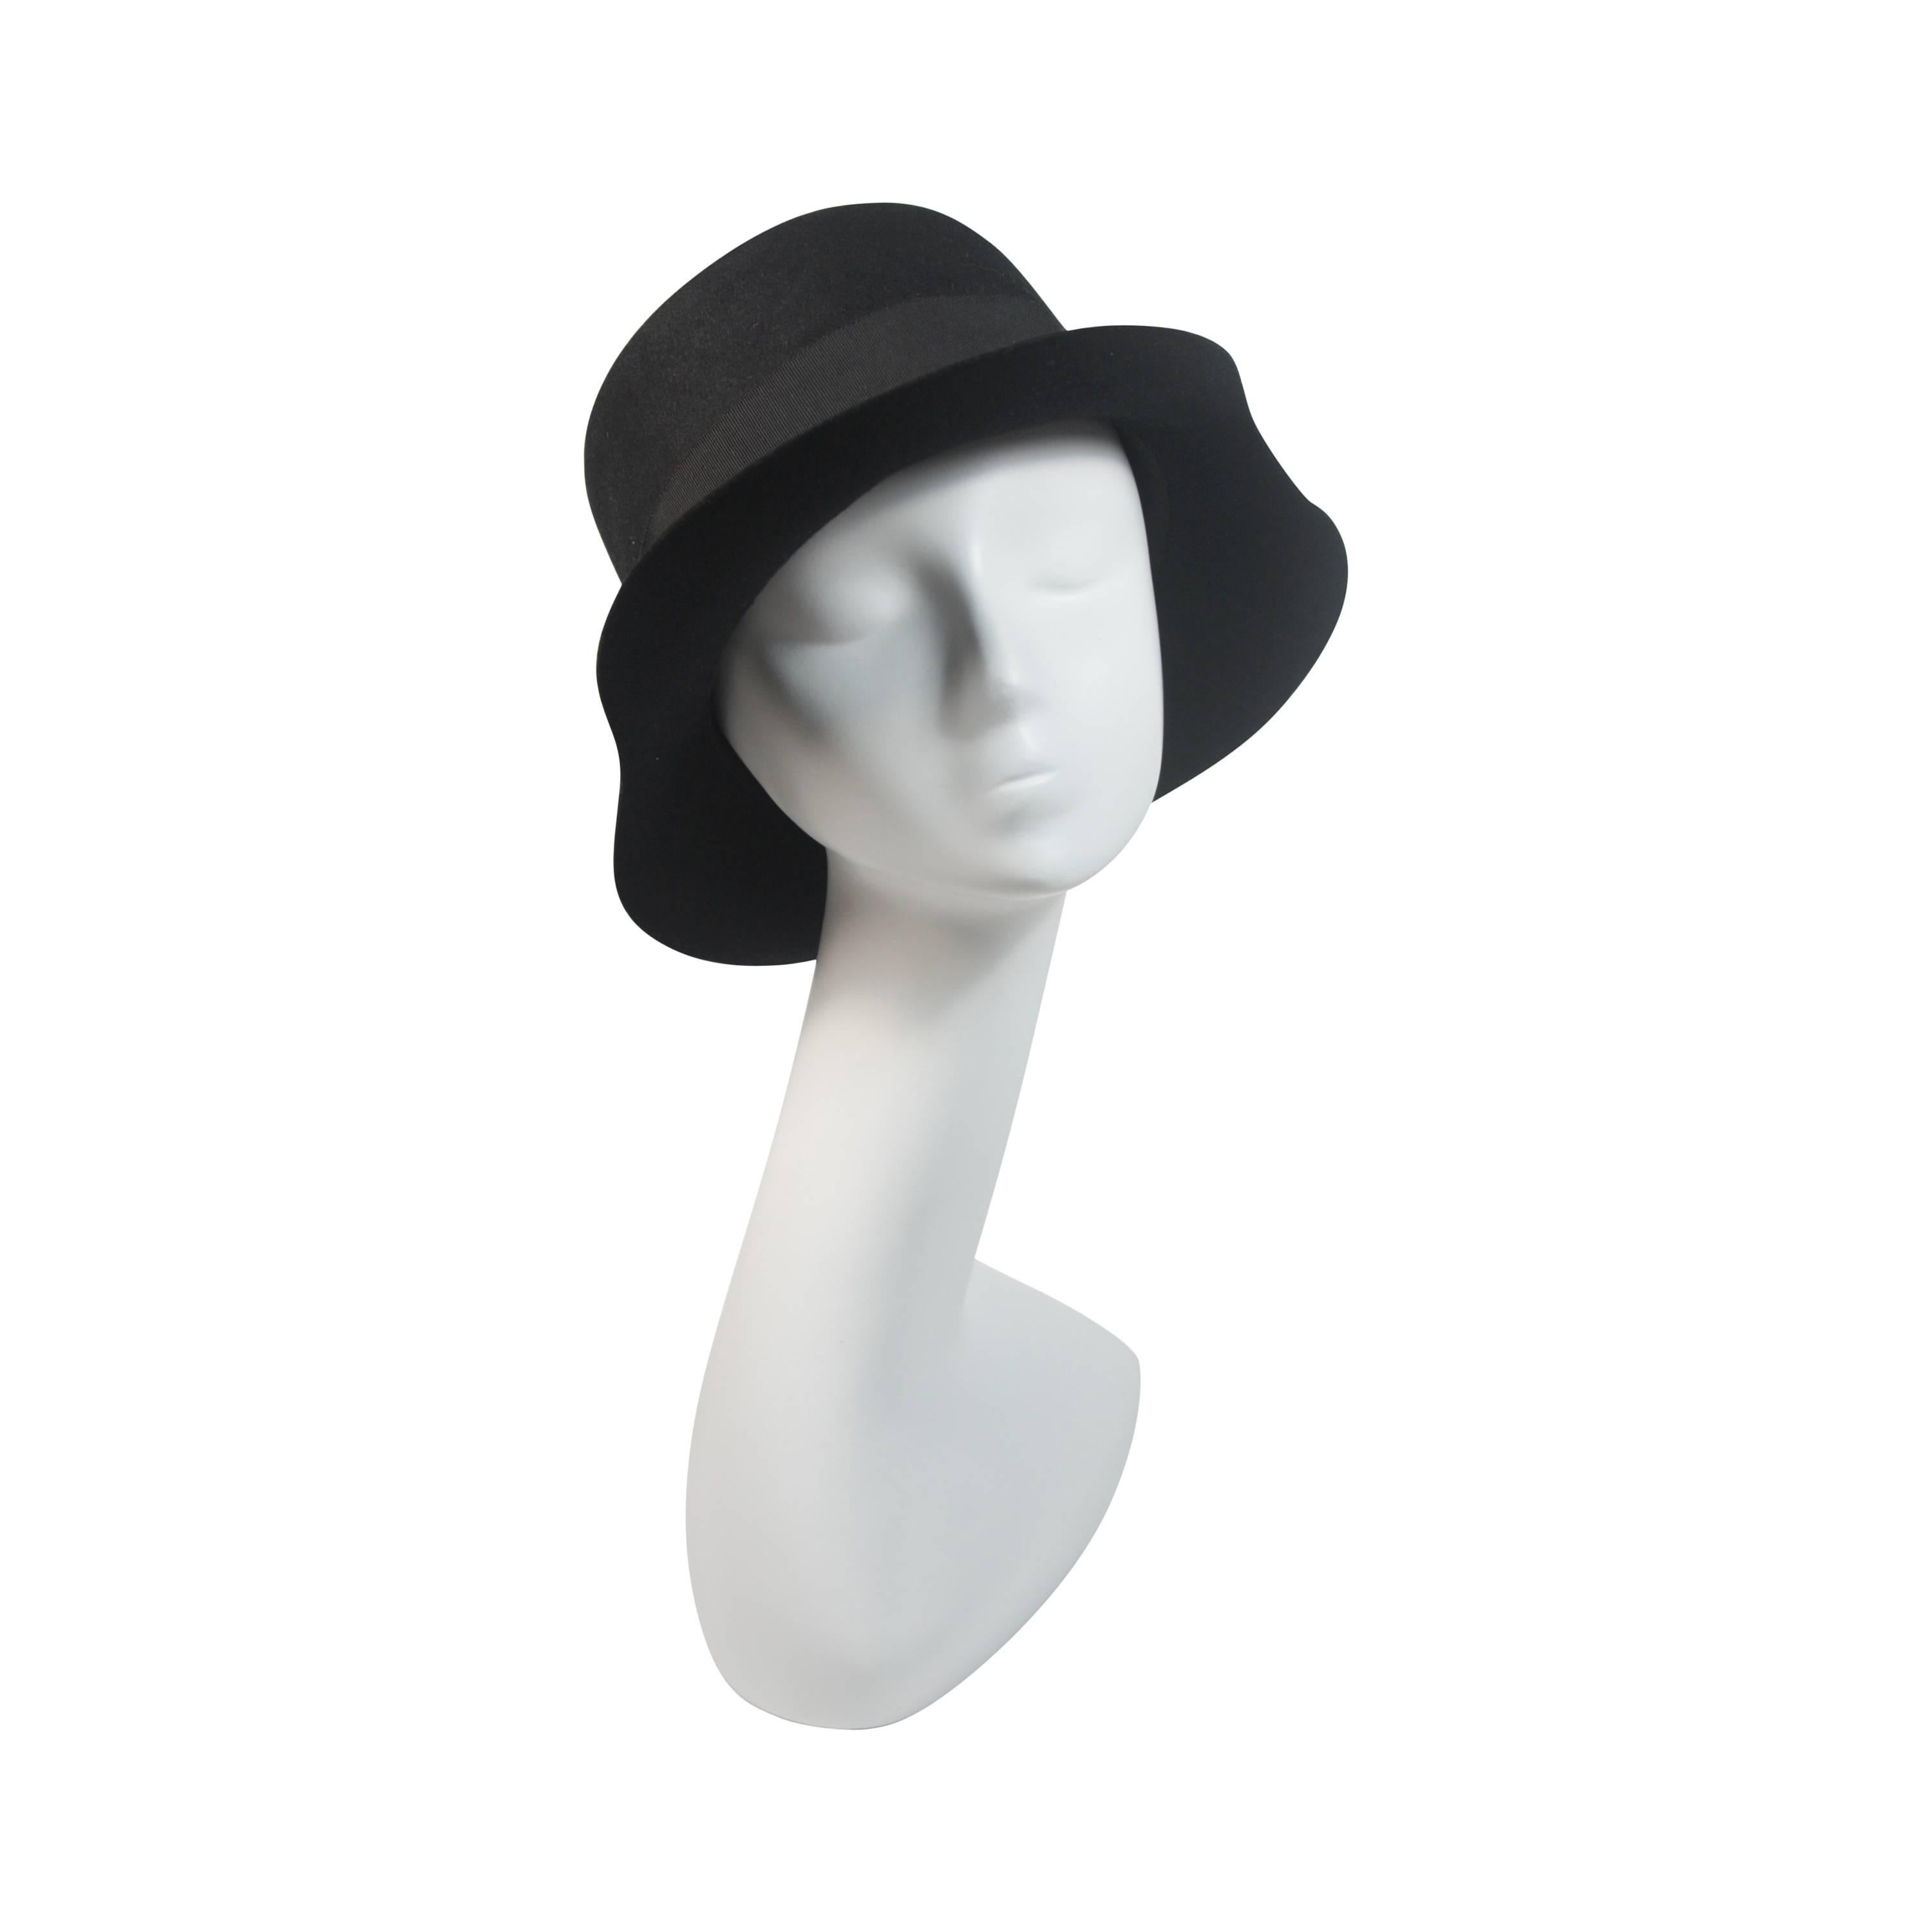 Yves Saint Laurent Rive Gauche 1980's Black Wool Felt Hat with Curved Brim 59